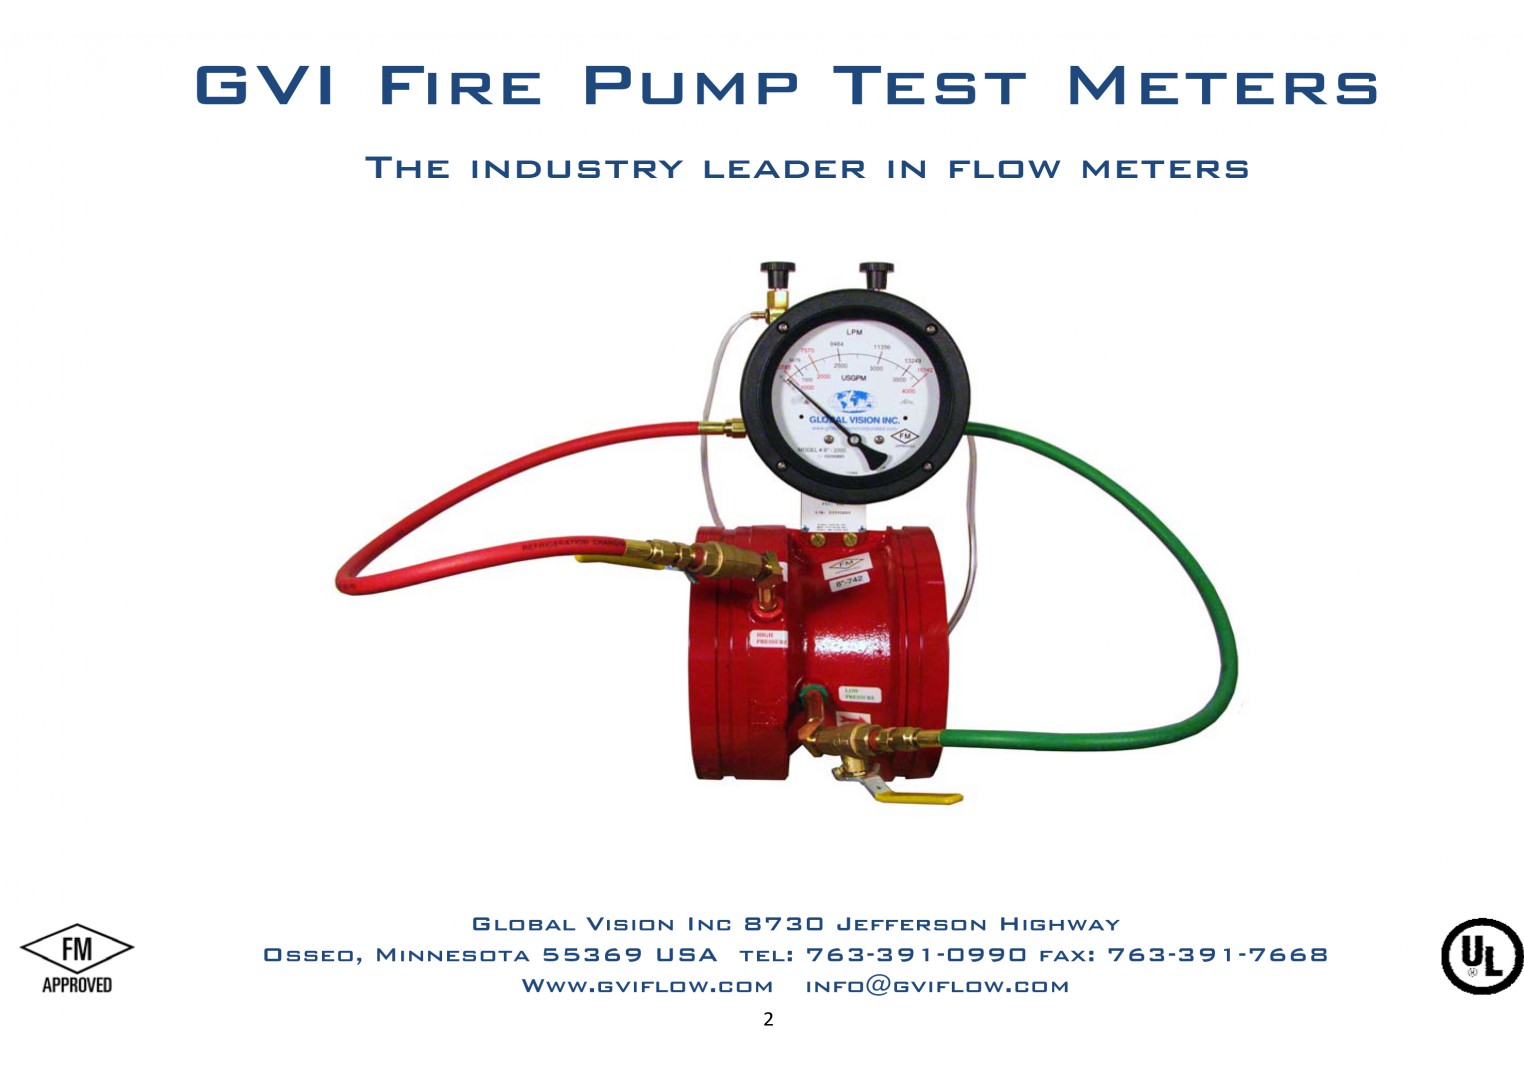 Fire Pump Test Meter "GVI"